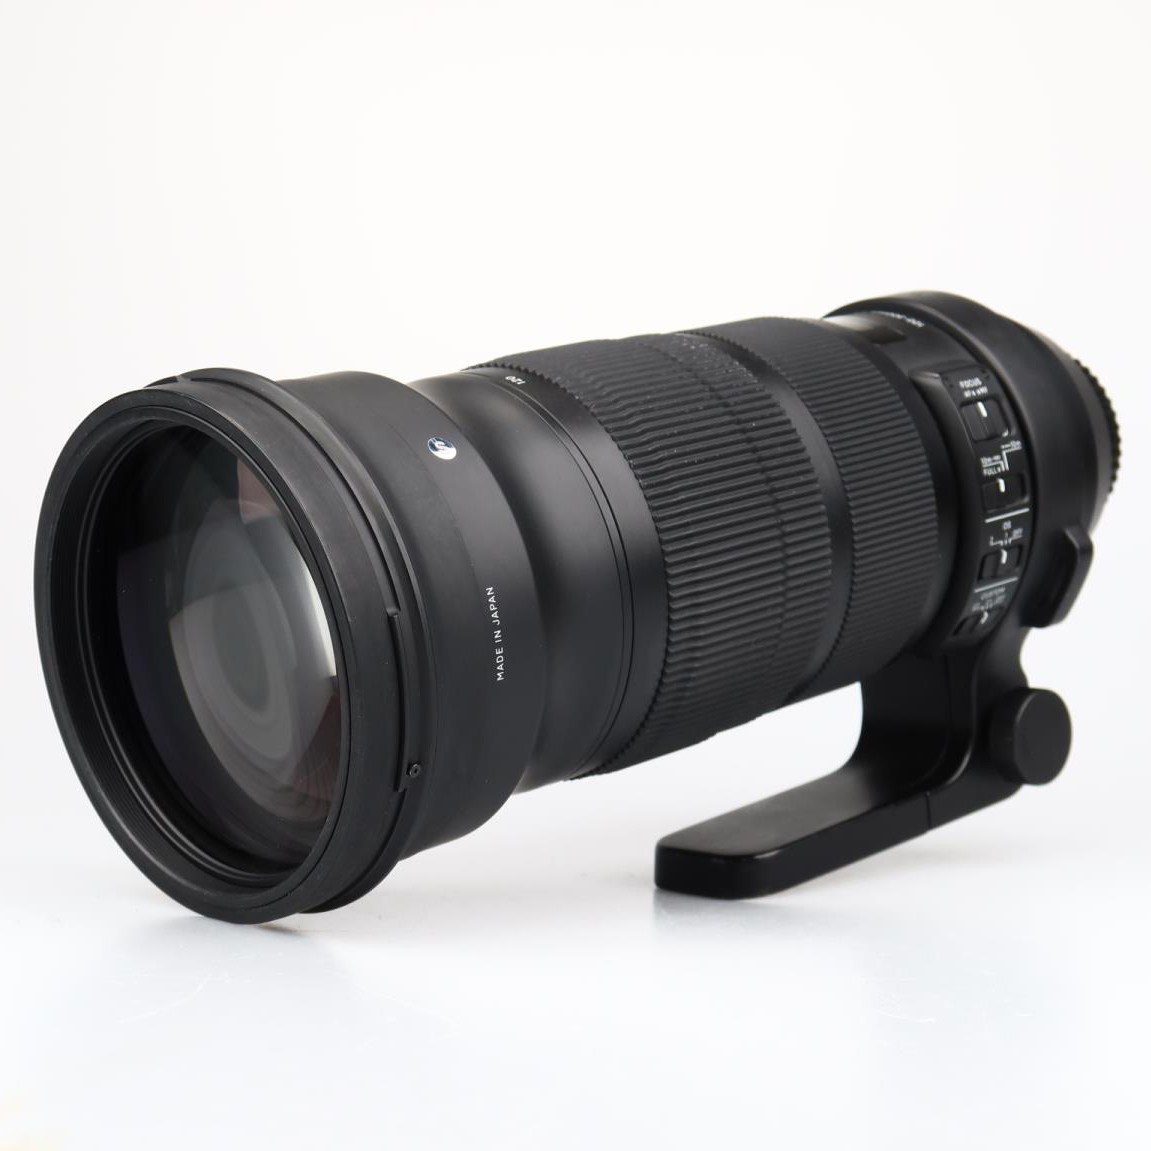 (myyty) Sigma 120-300mm f/2.8 DG OS HSM Sport (Canon) (Käytetty)